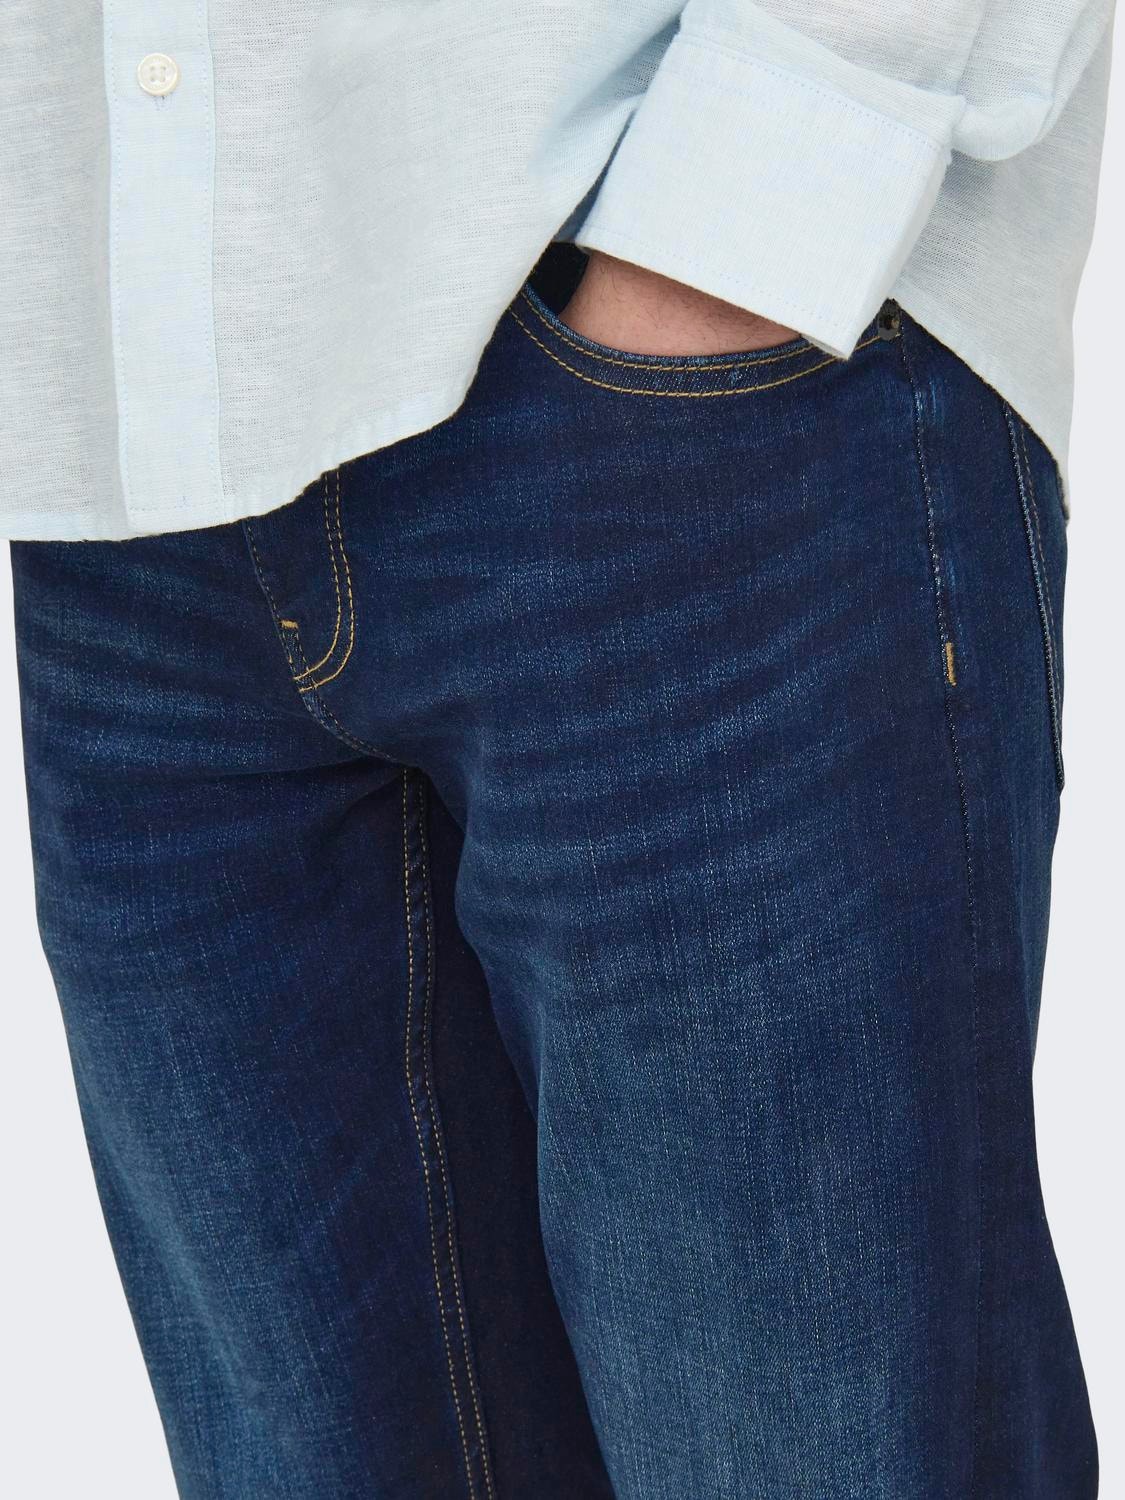 ONLY & SONS Slim Fit Niedrige Taille Jeans -Dark Blue Denim - 22029138